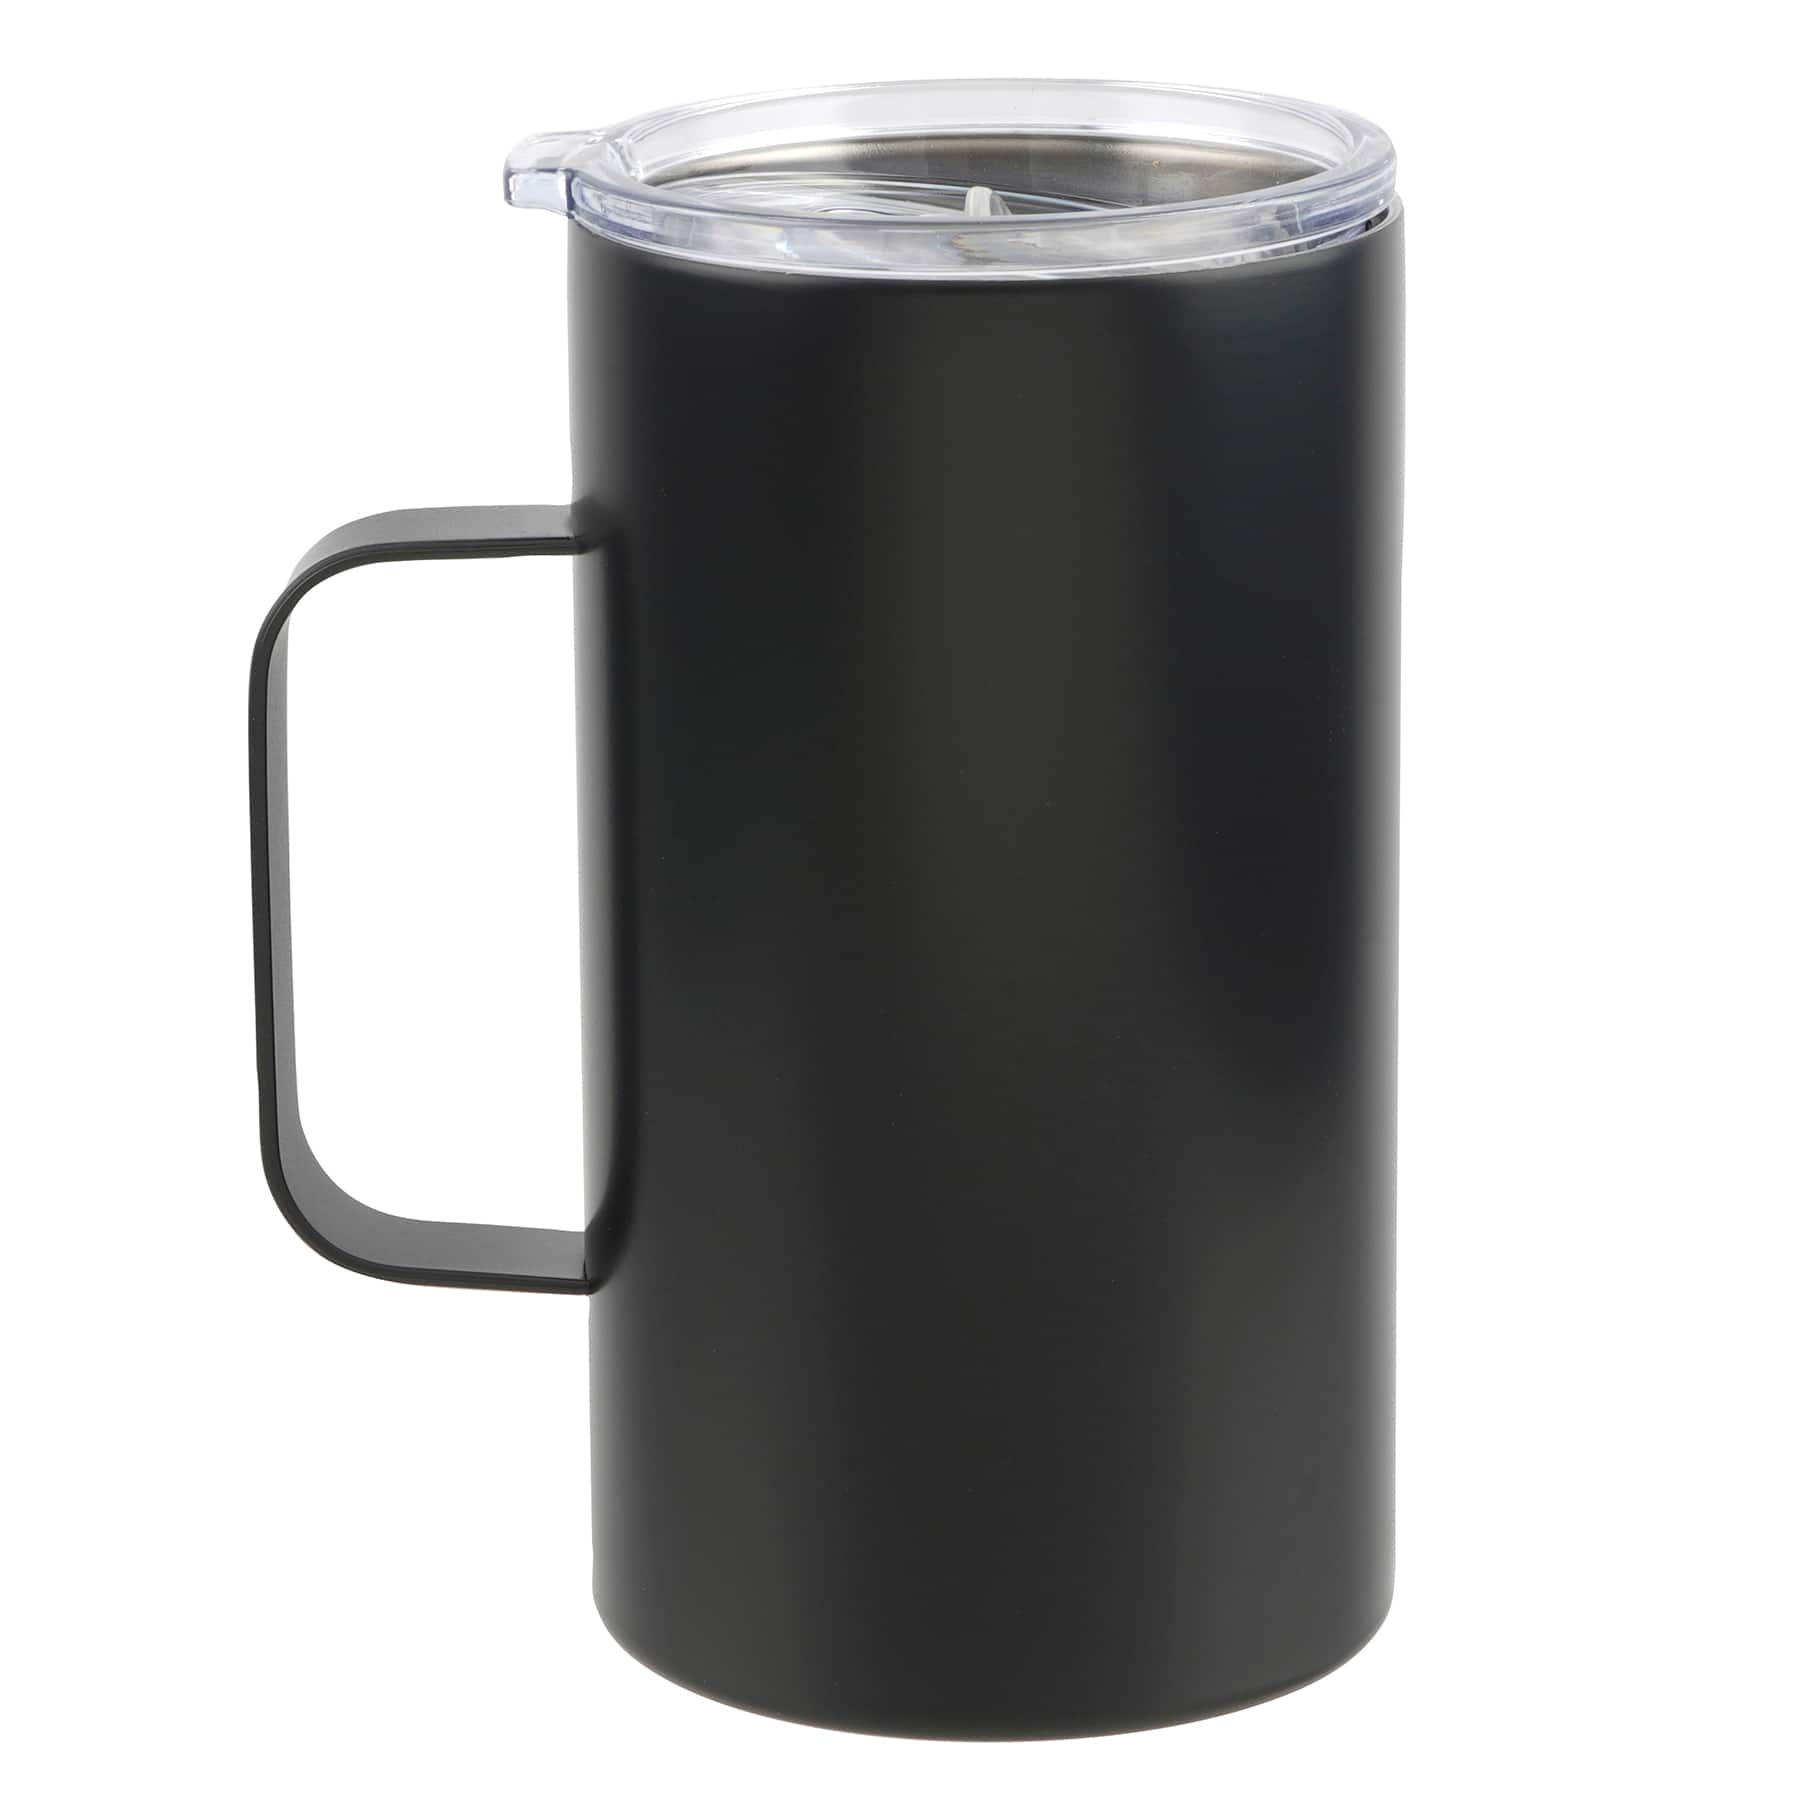 14oz. Stainless Steel Coffee Mug by Celebrate It™